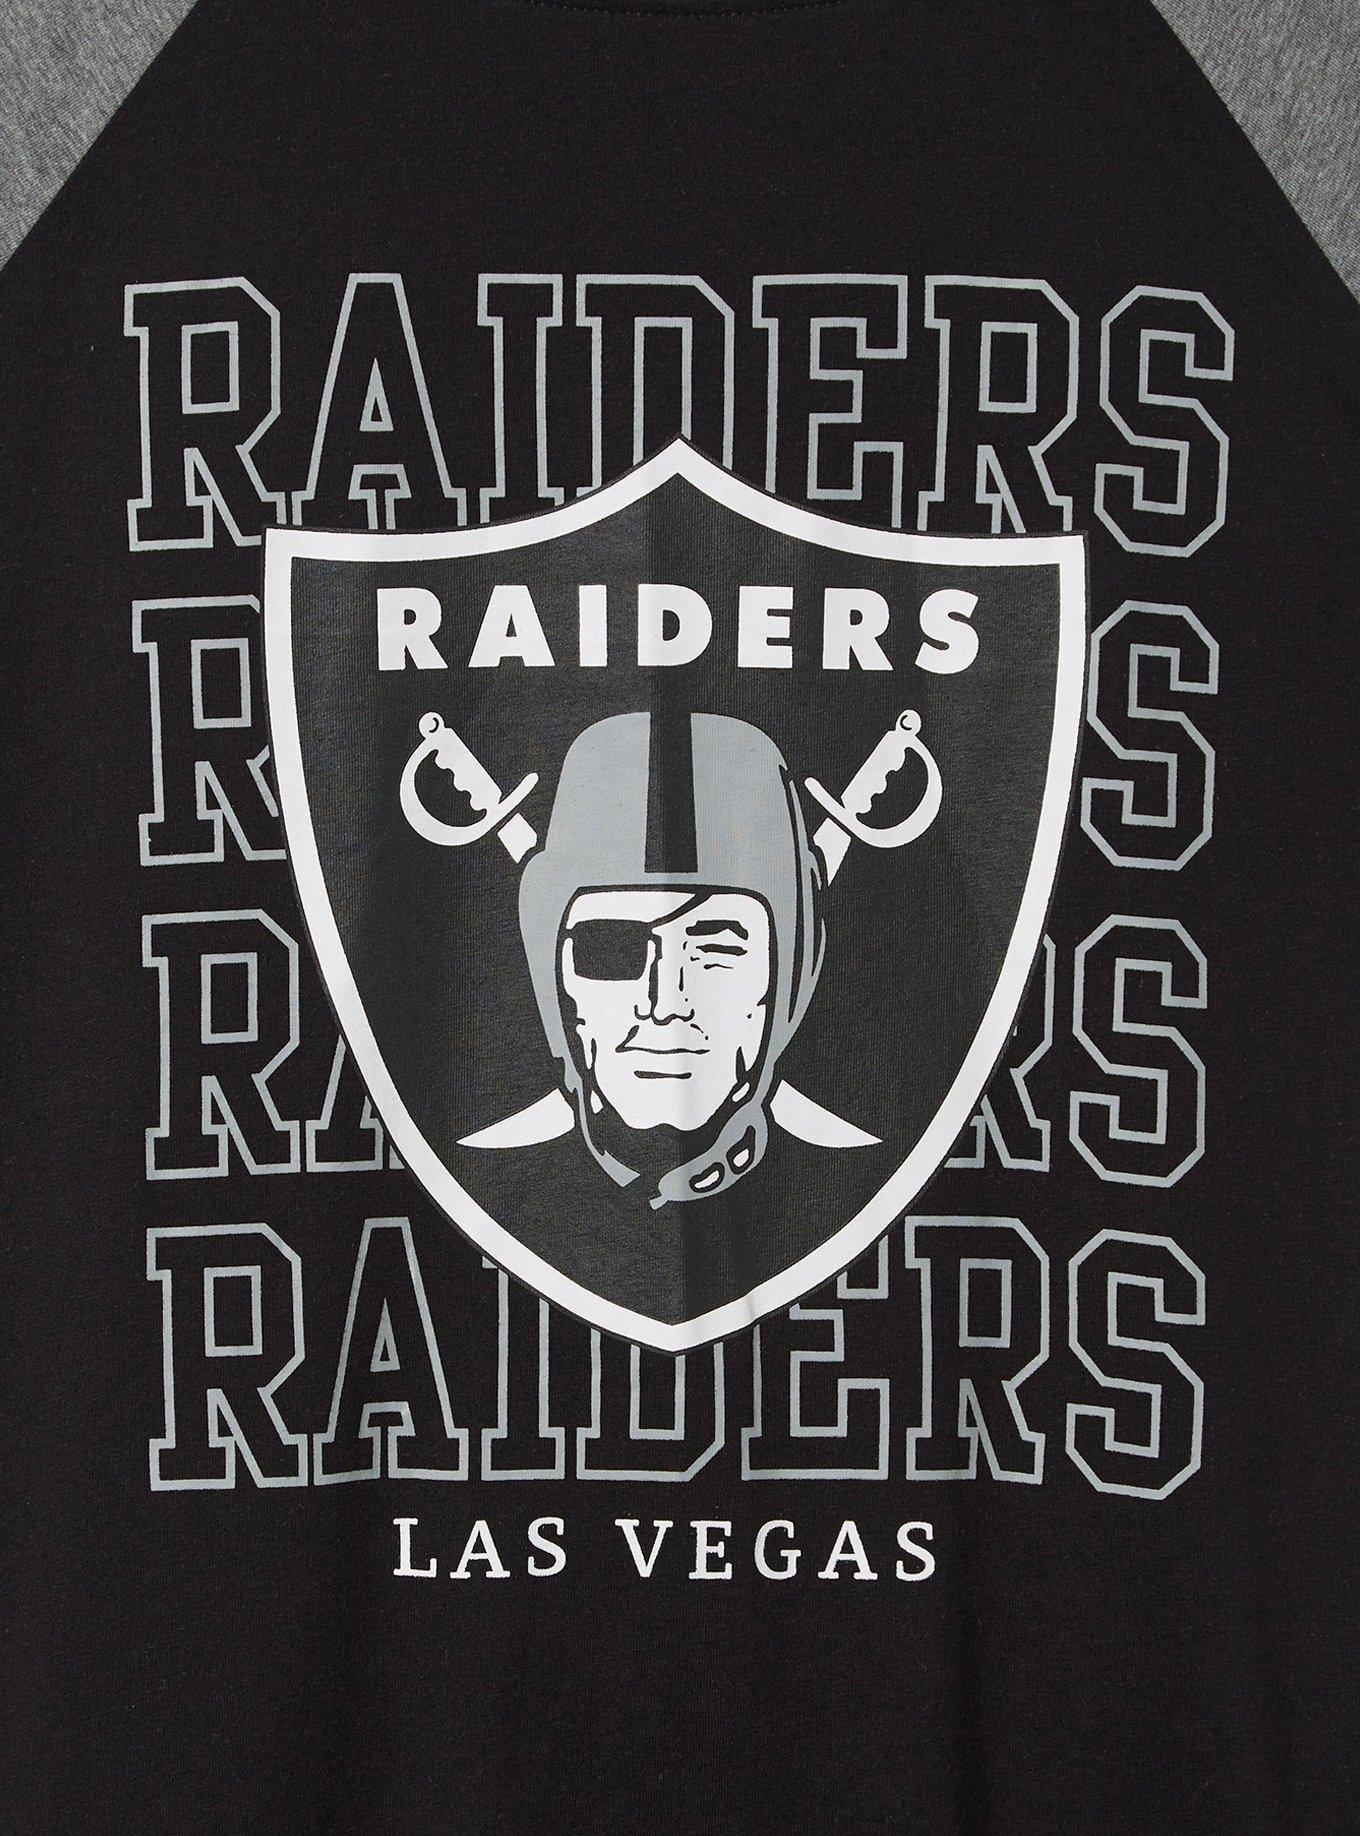 Las Vegas Raiders Black Friday Deals, Raiders Cyber Monday Sales